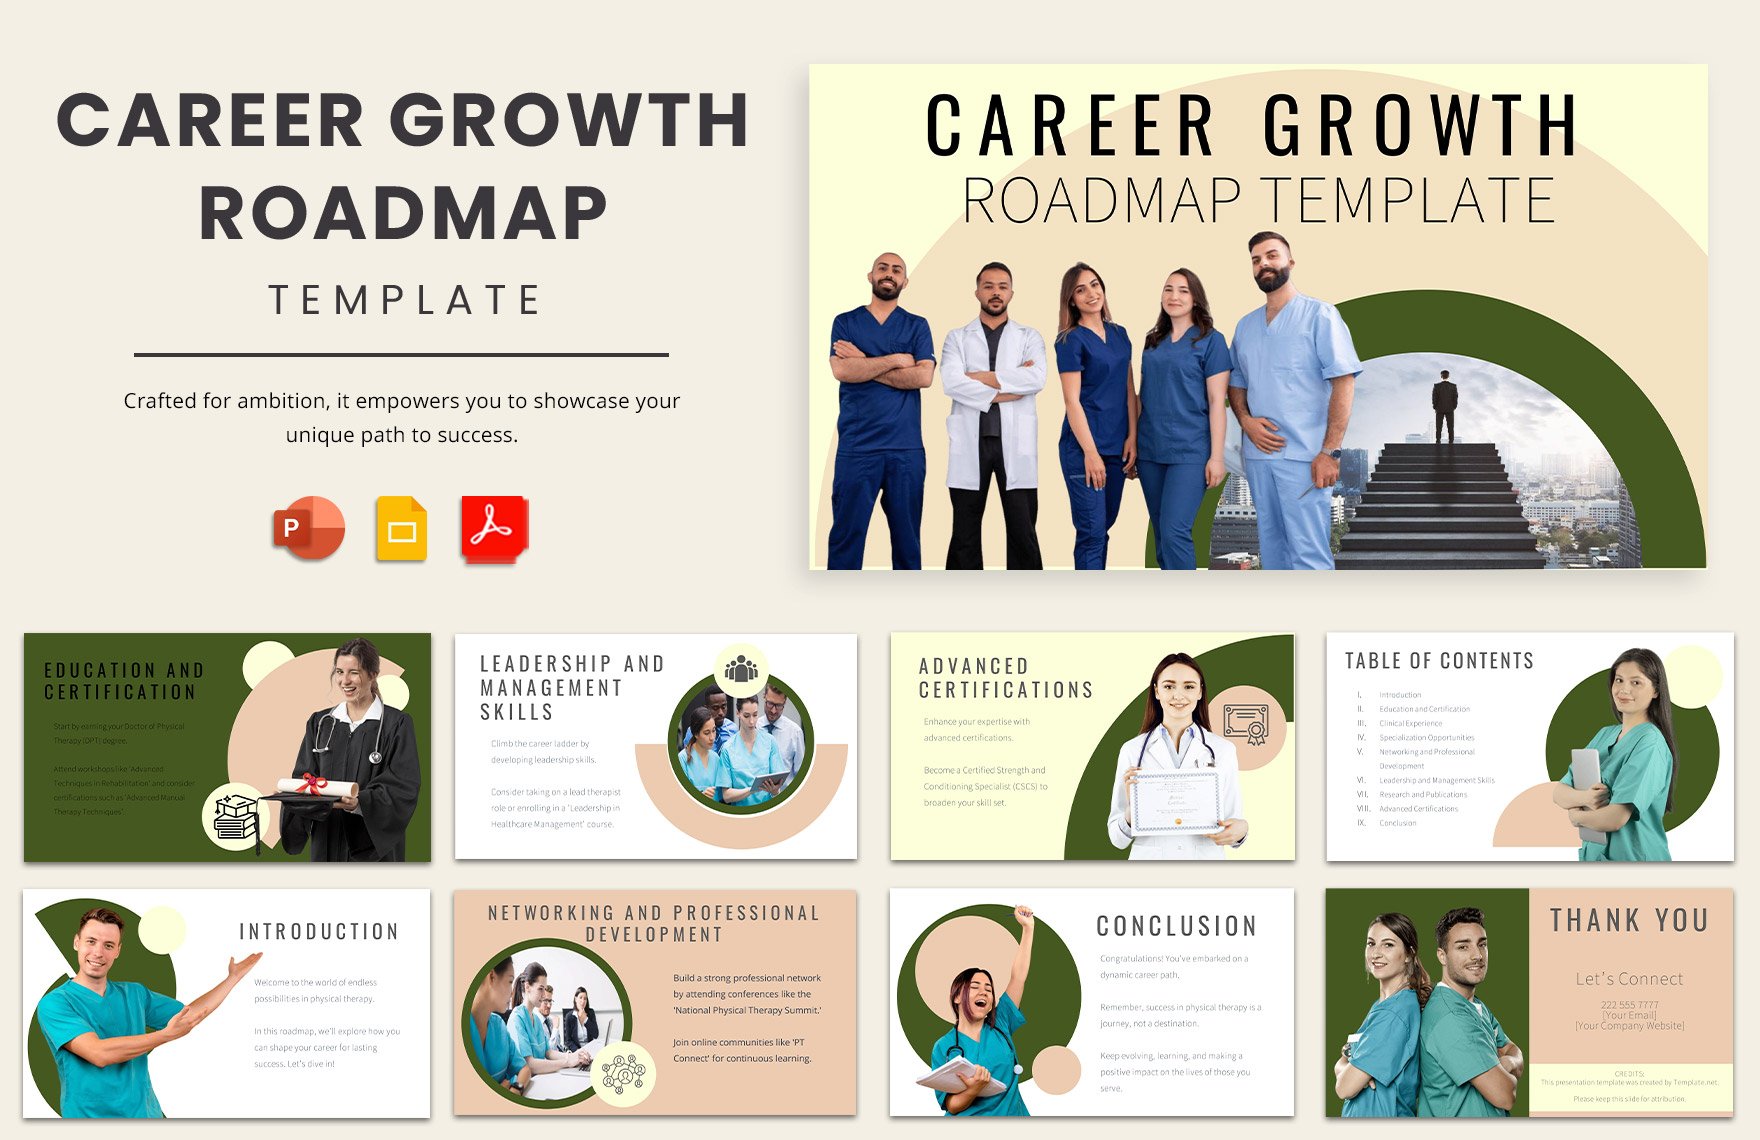 Career Growth Roadmap Template